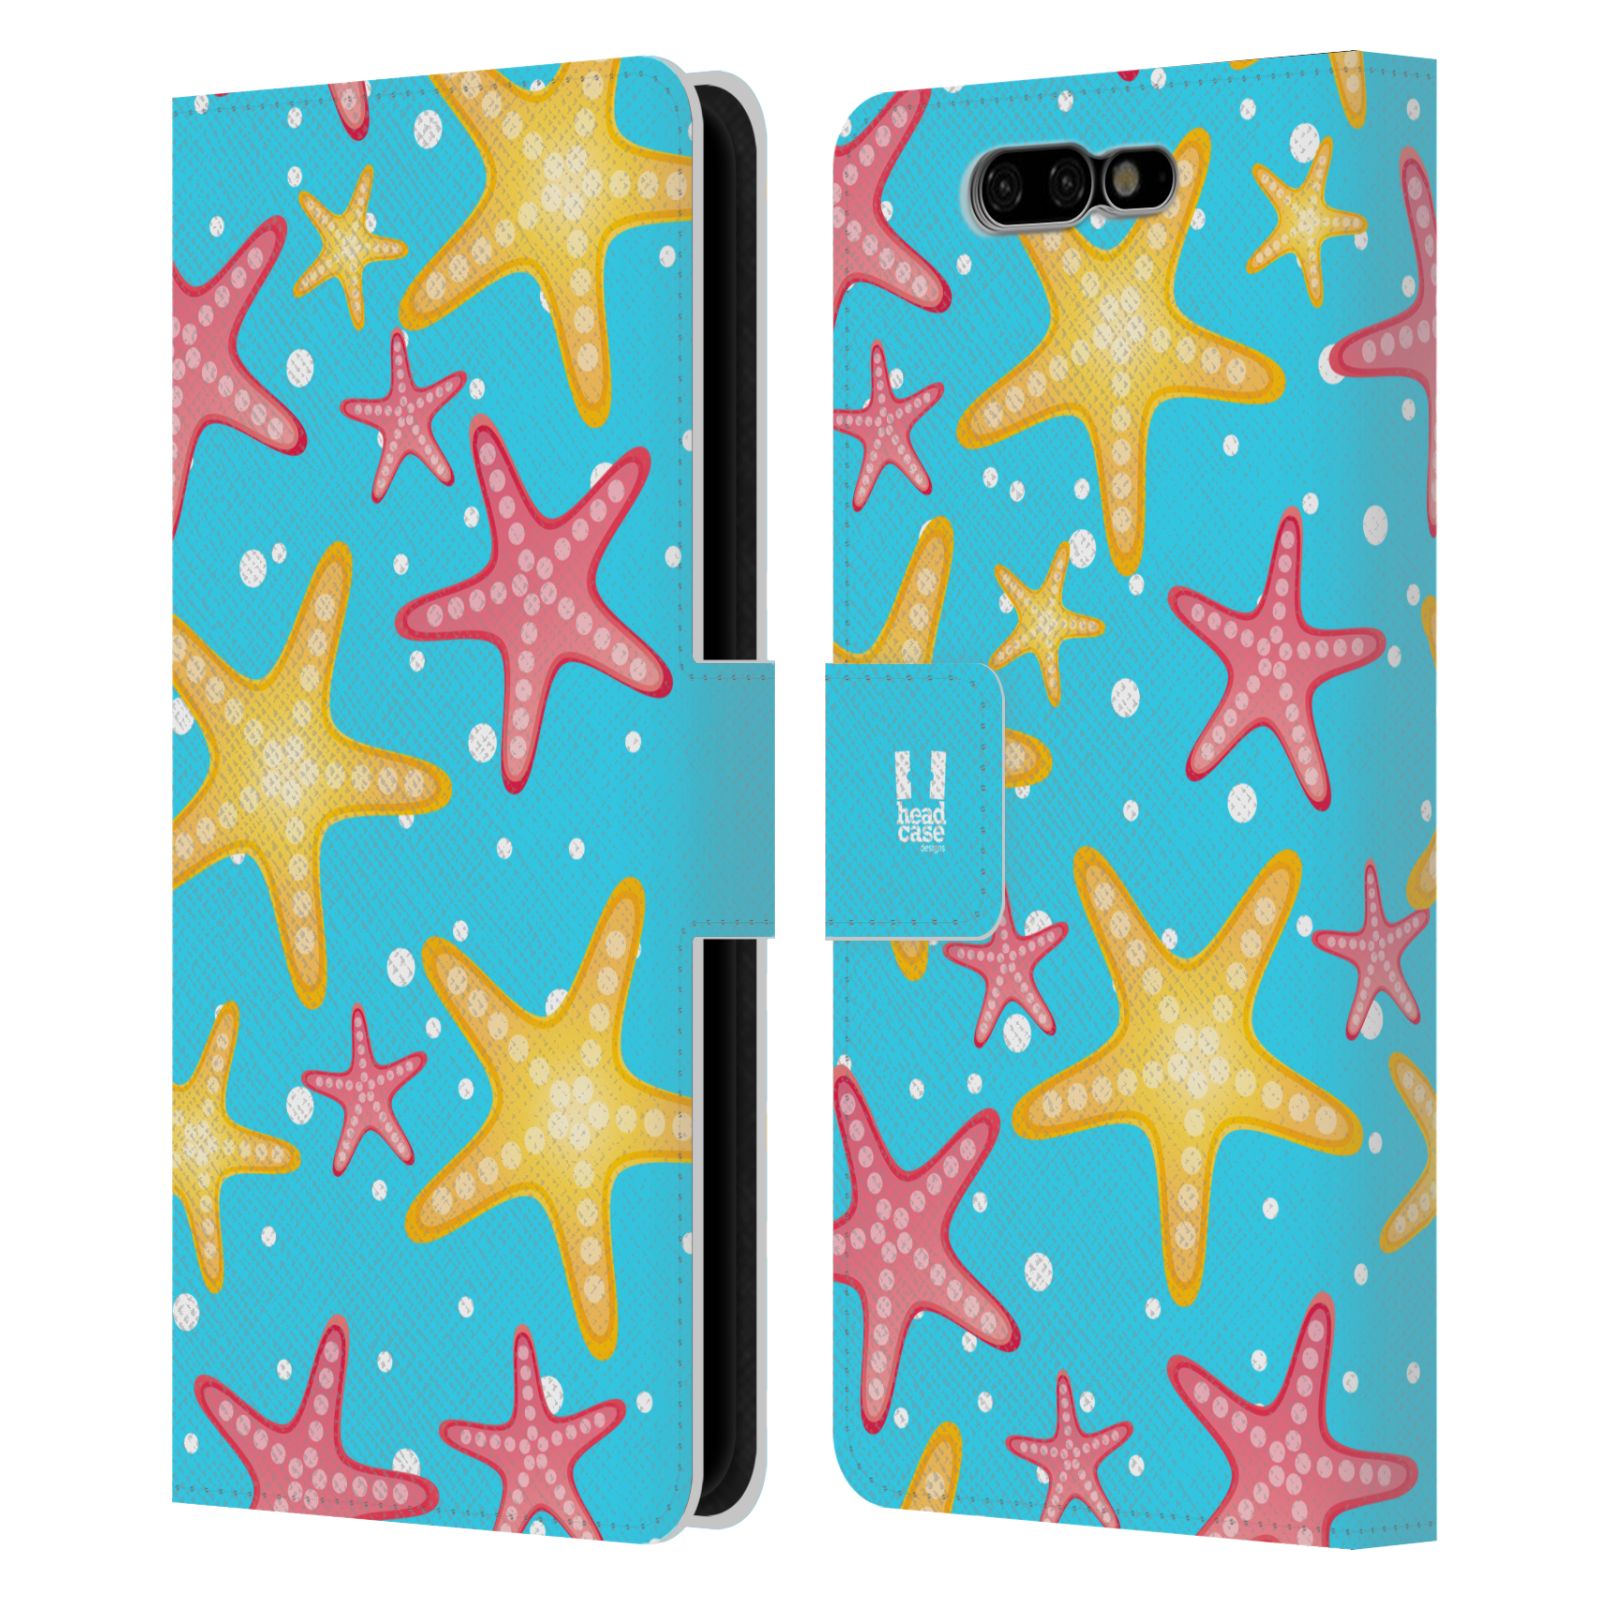 Pouzdro pro mobil Xiaomi Black Shark  - Mořský vzor - barevné hvězdy